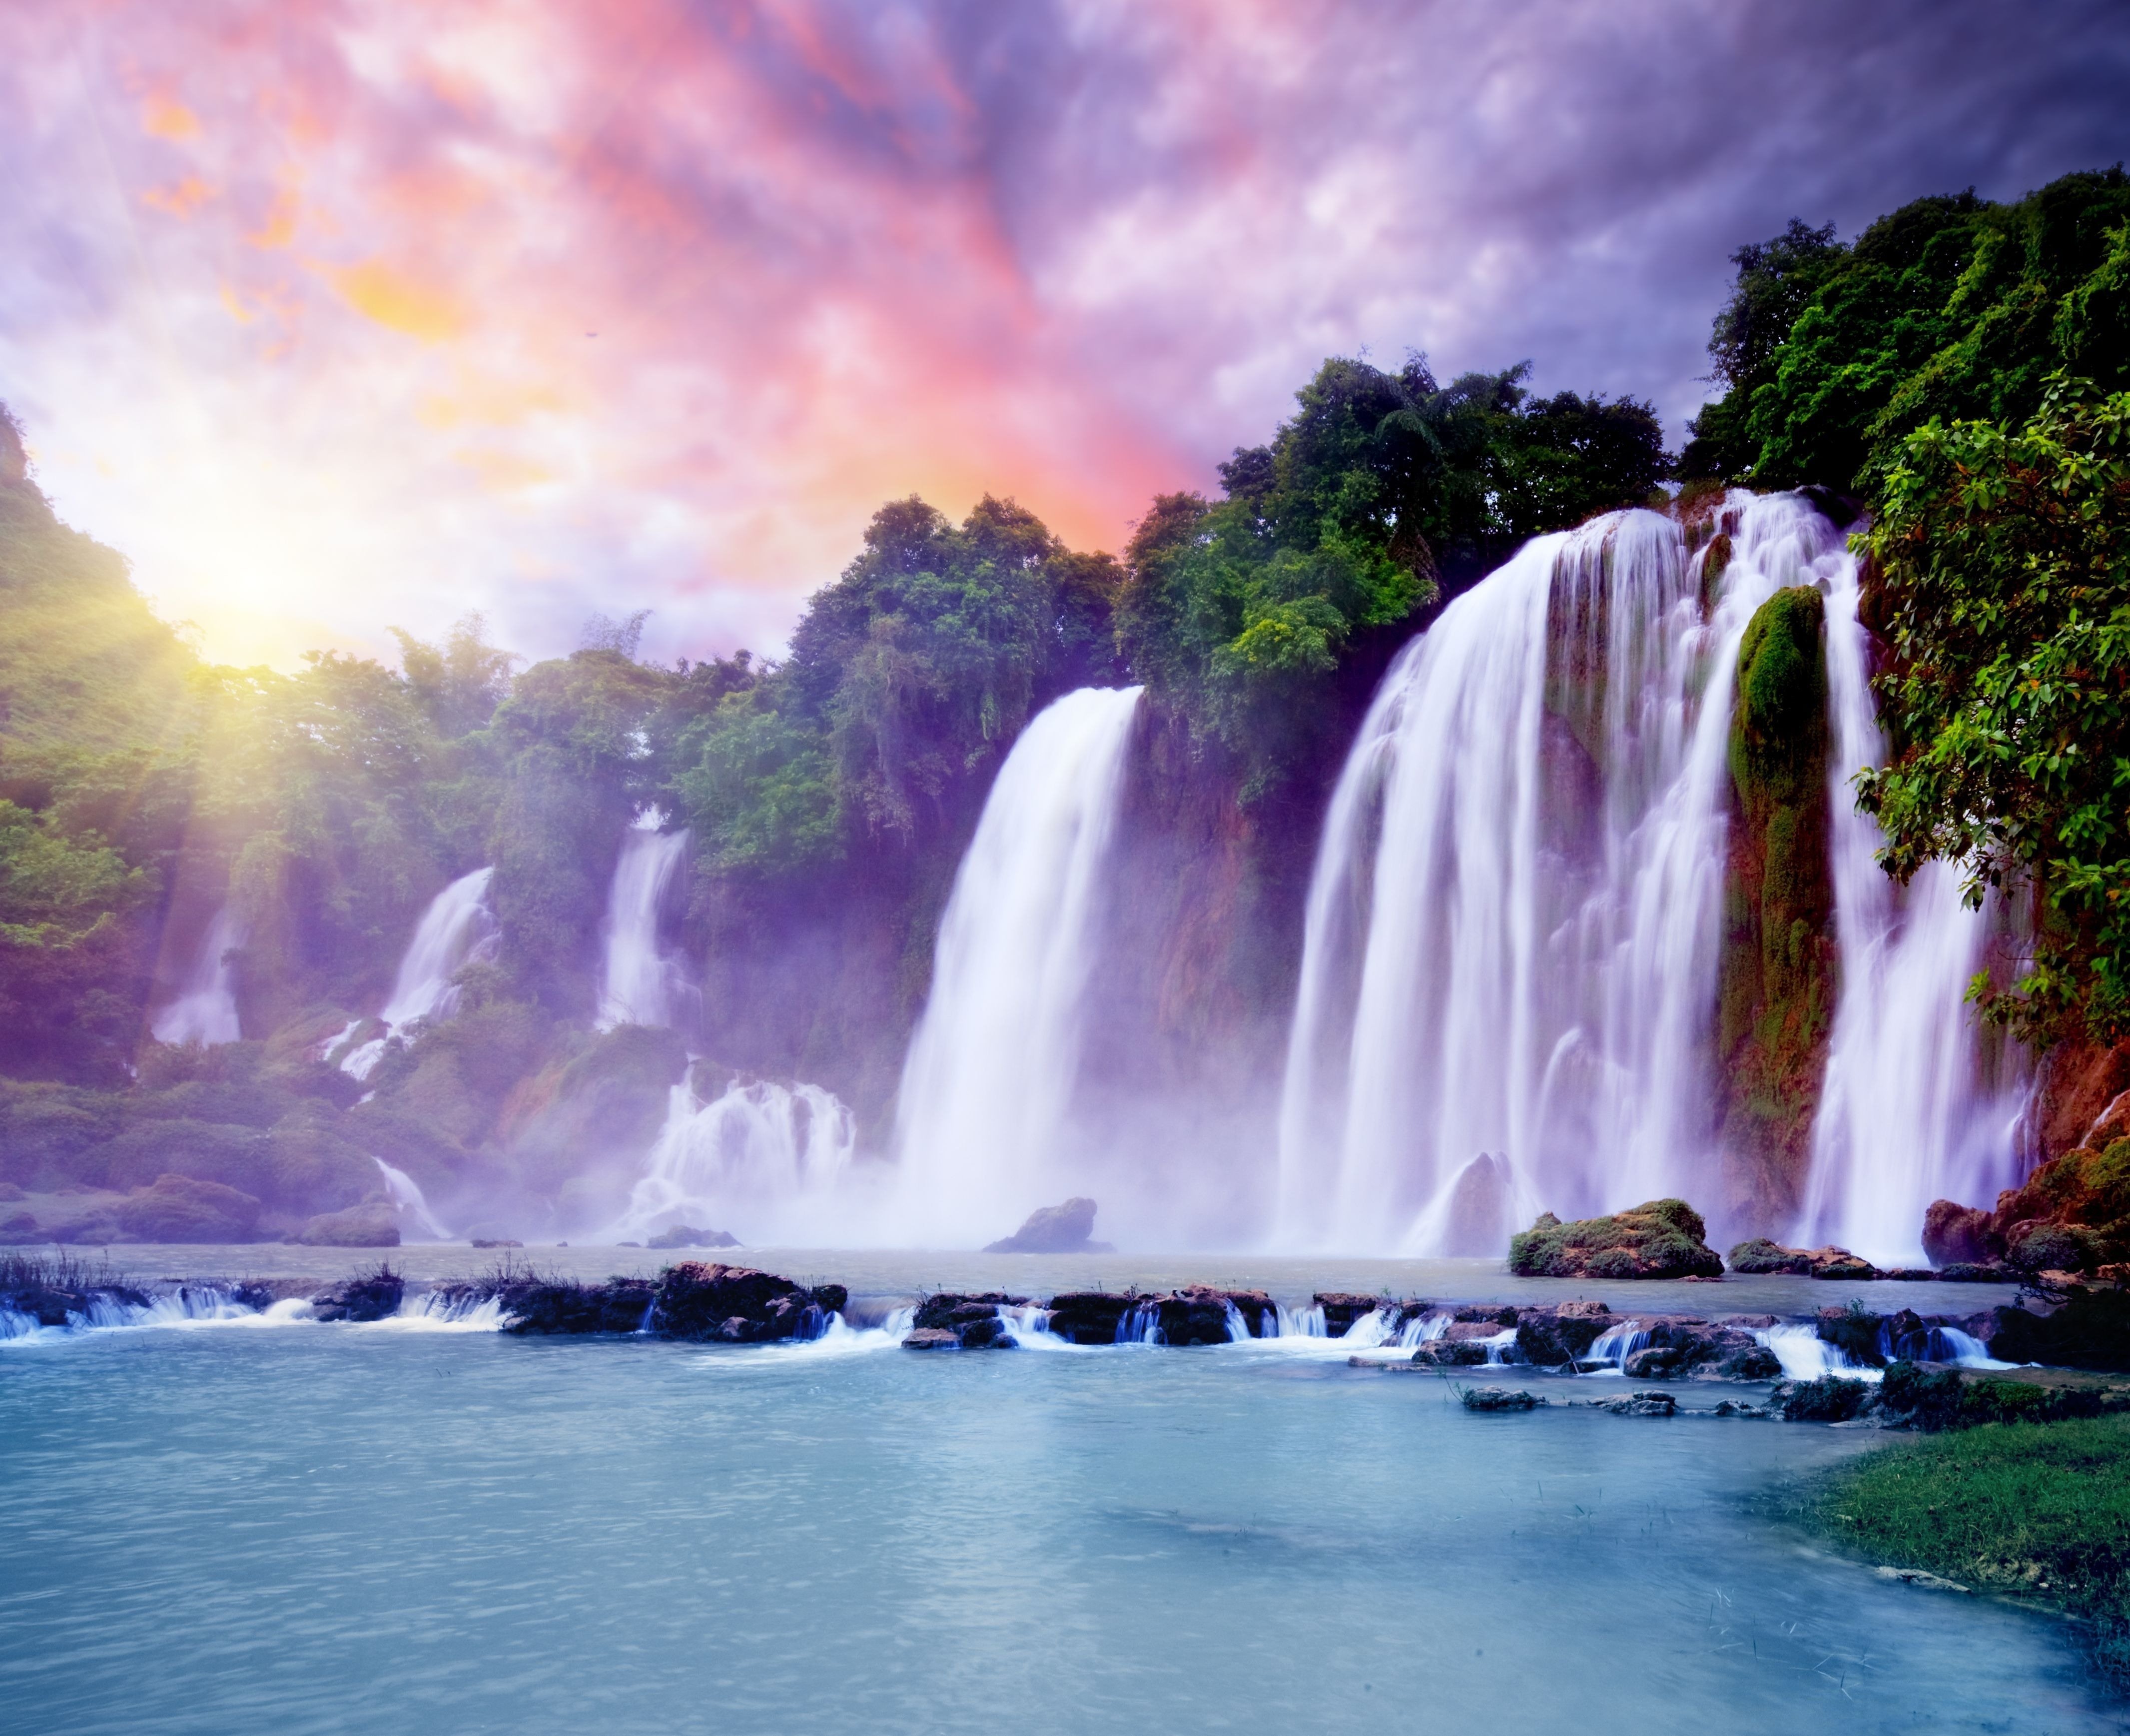 Показать картинку. Air Terjun водопад. Вриндаван водопады. Пейзаж водопад. Красивые пейзажи с водопадами.